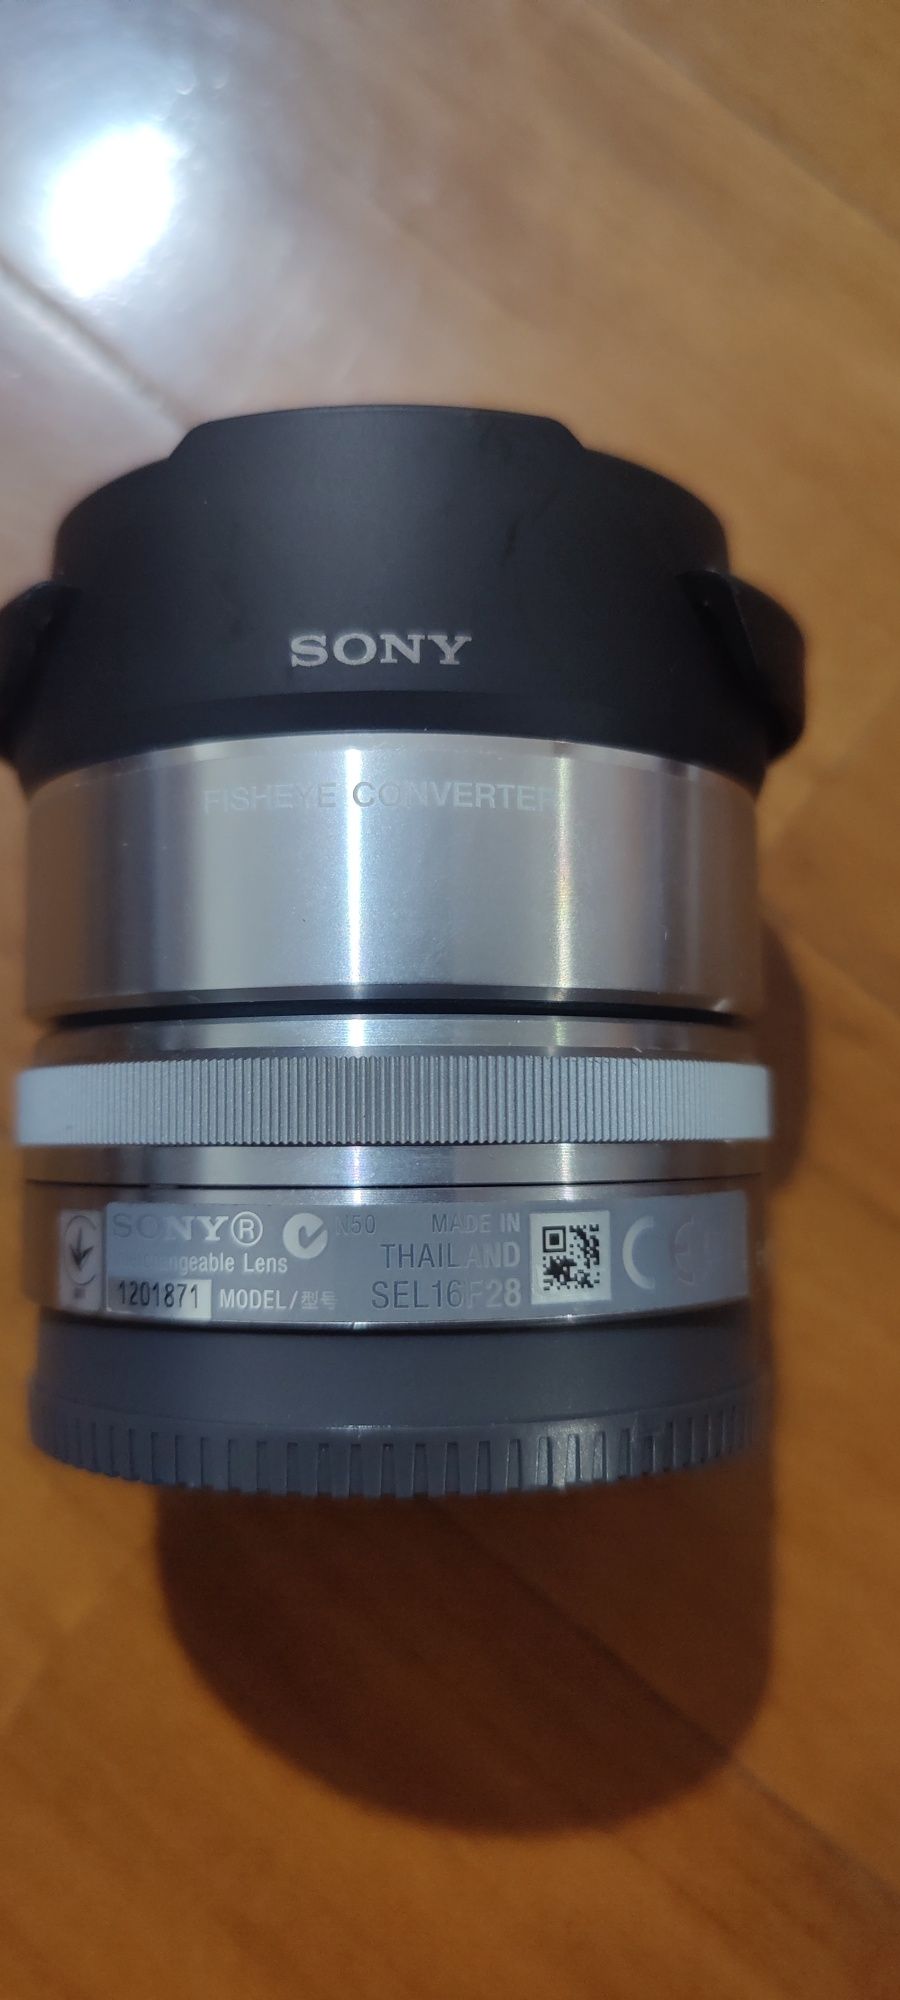 Objetiva Sony Sel 16f28 + conversor fhisheye